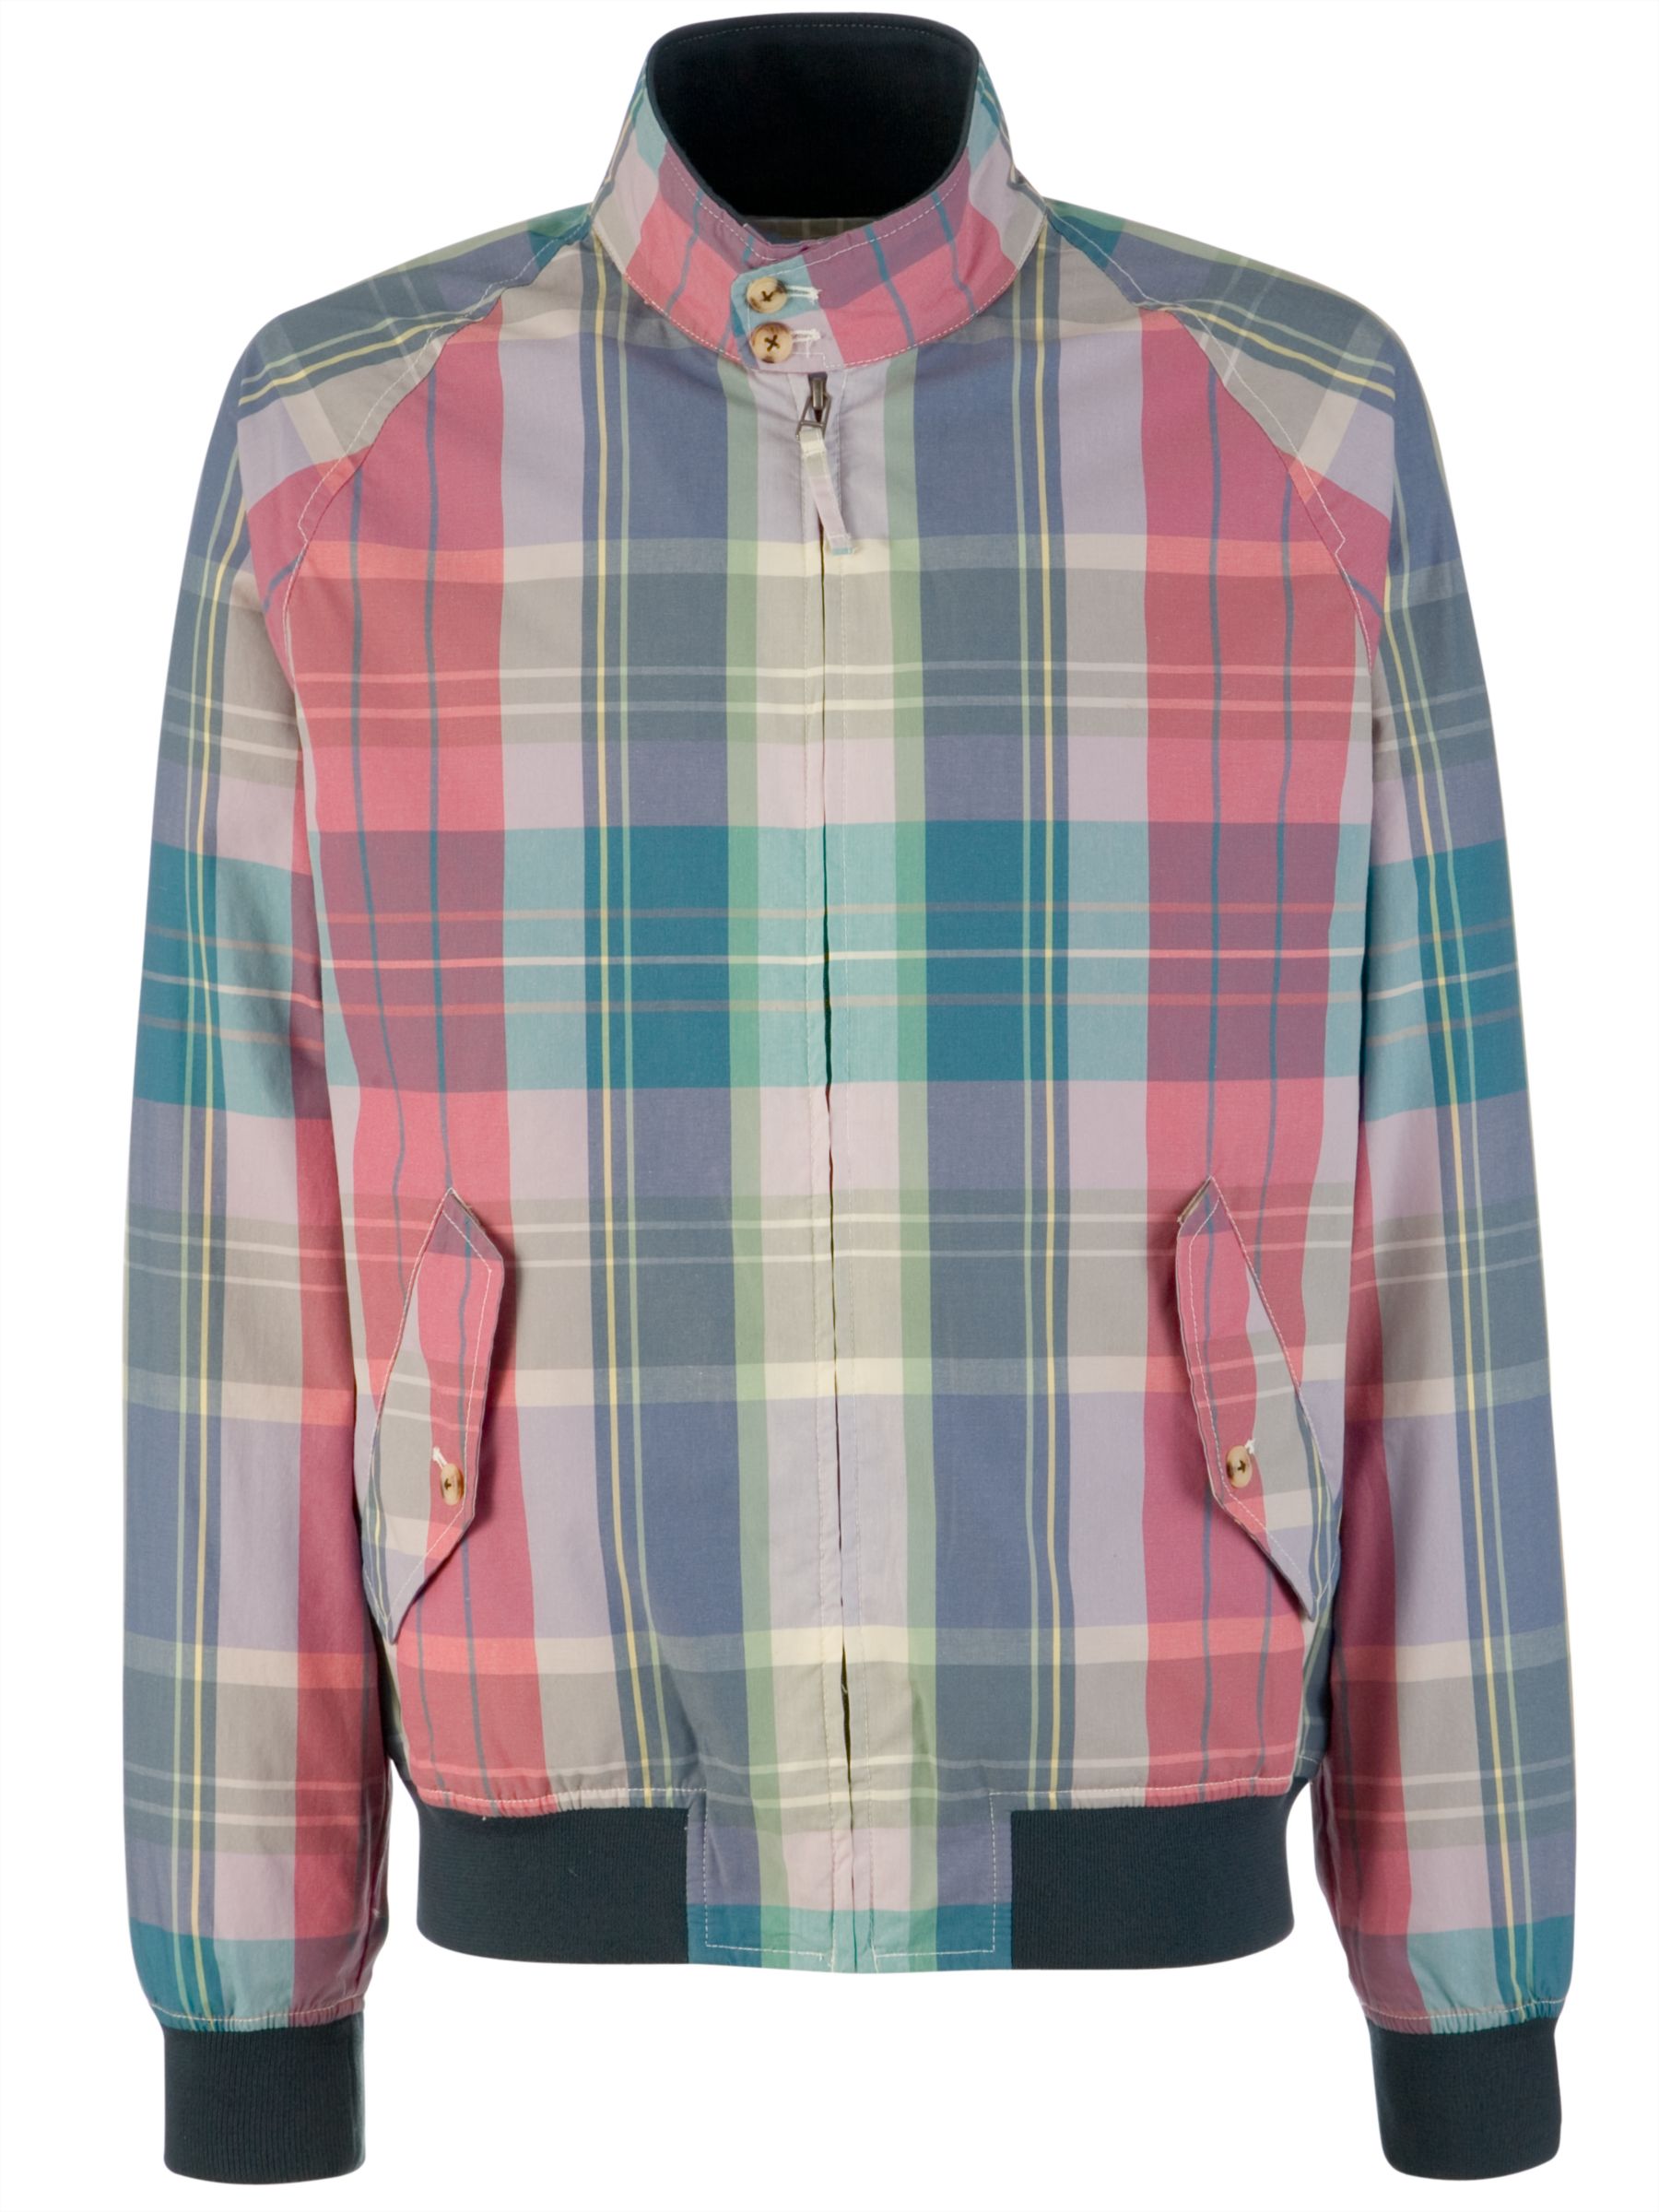 Gant Miami Madras Check Jacket, Multicoloured at John Lewis